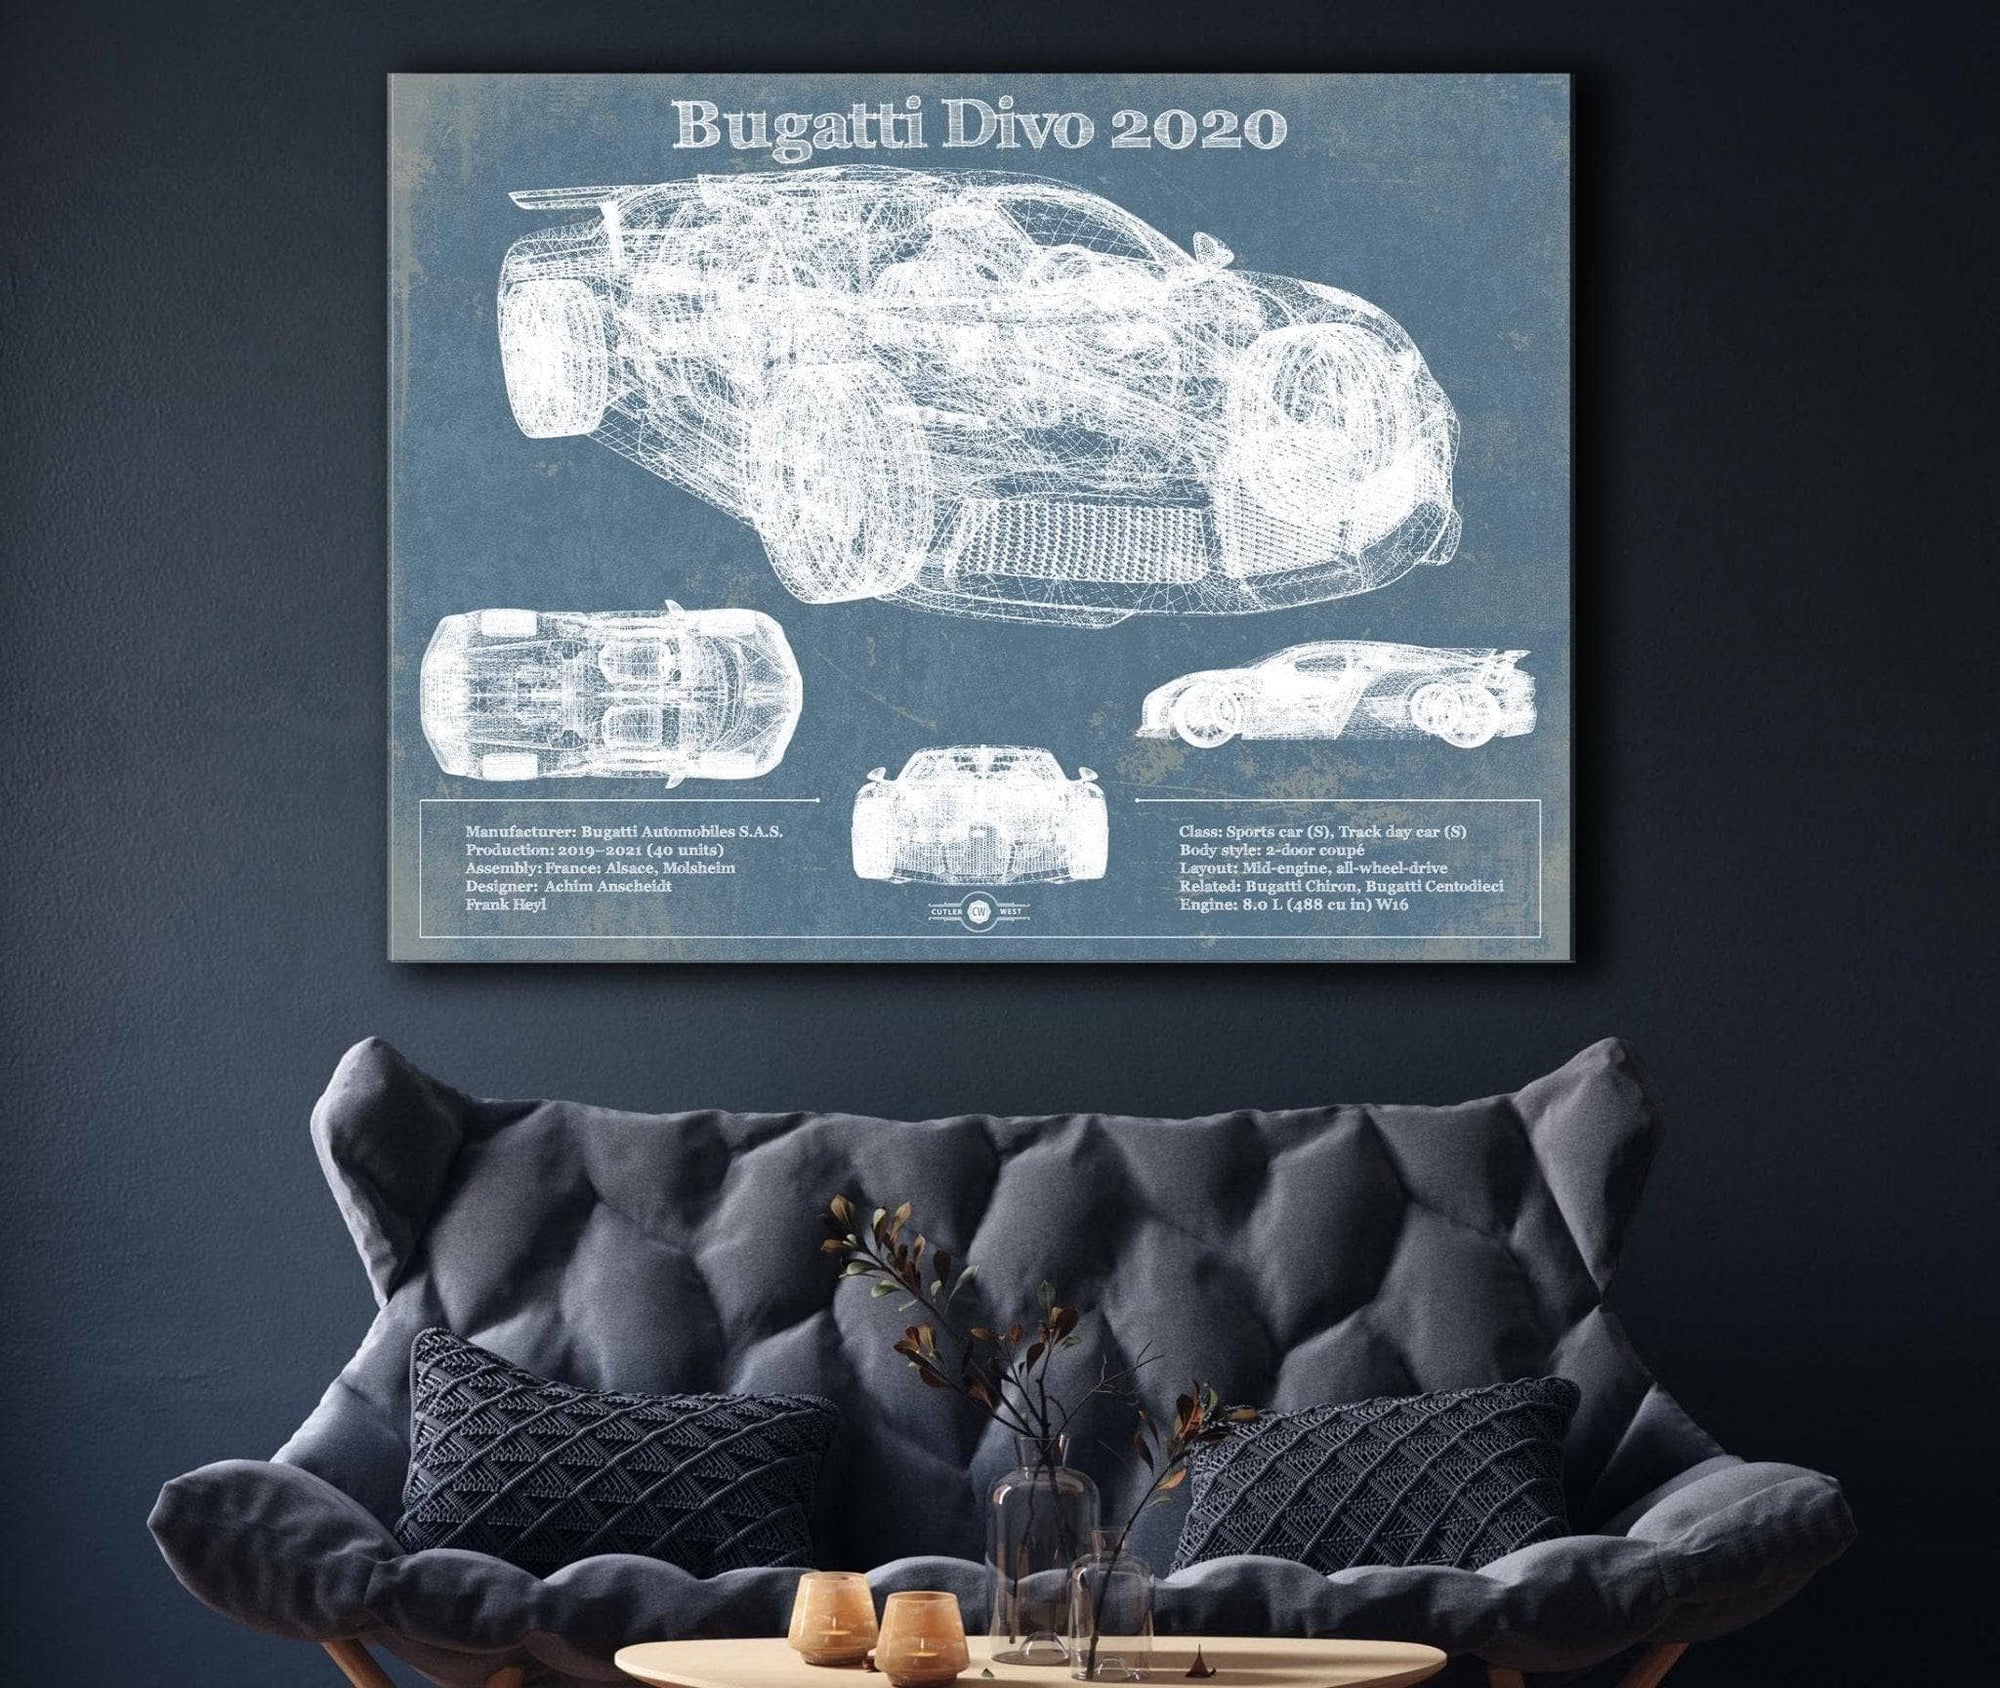 Cutler West Vehicle Collection Bugatti Divo 2020 Vintage Sports Car Print